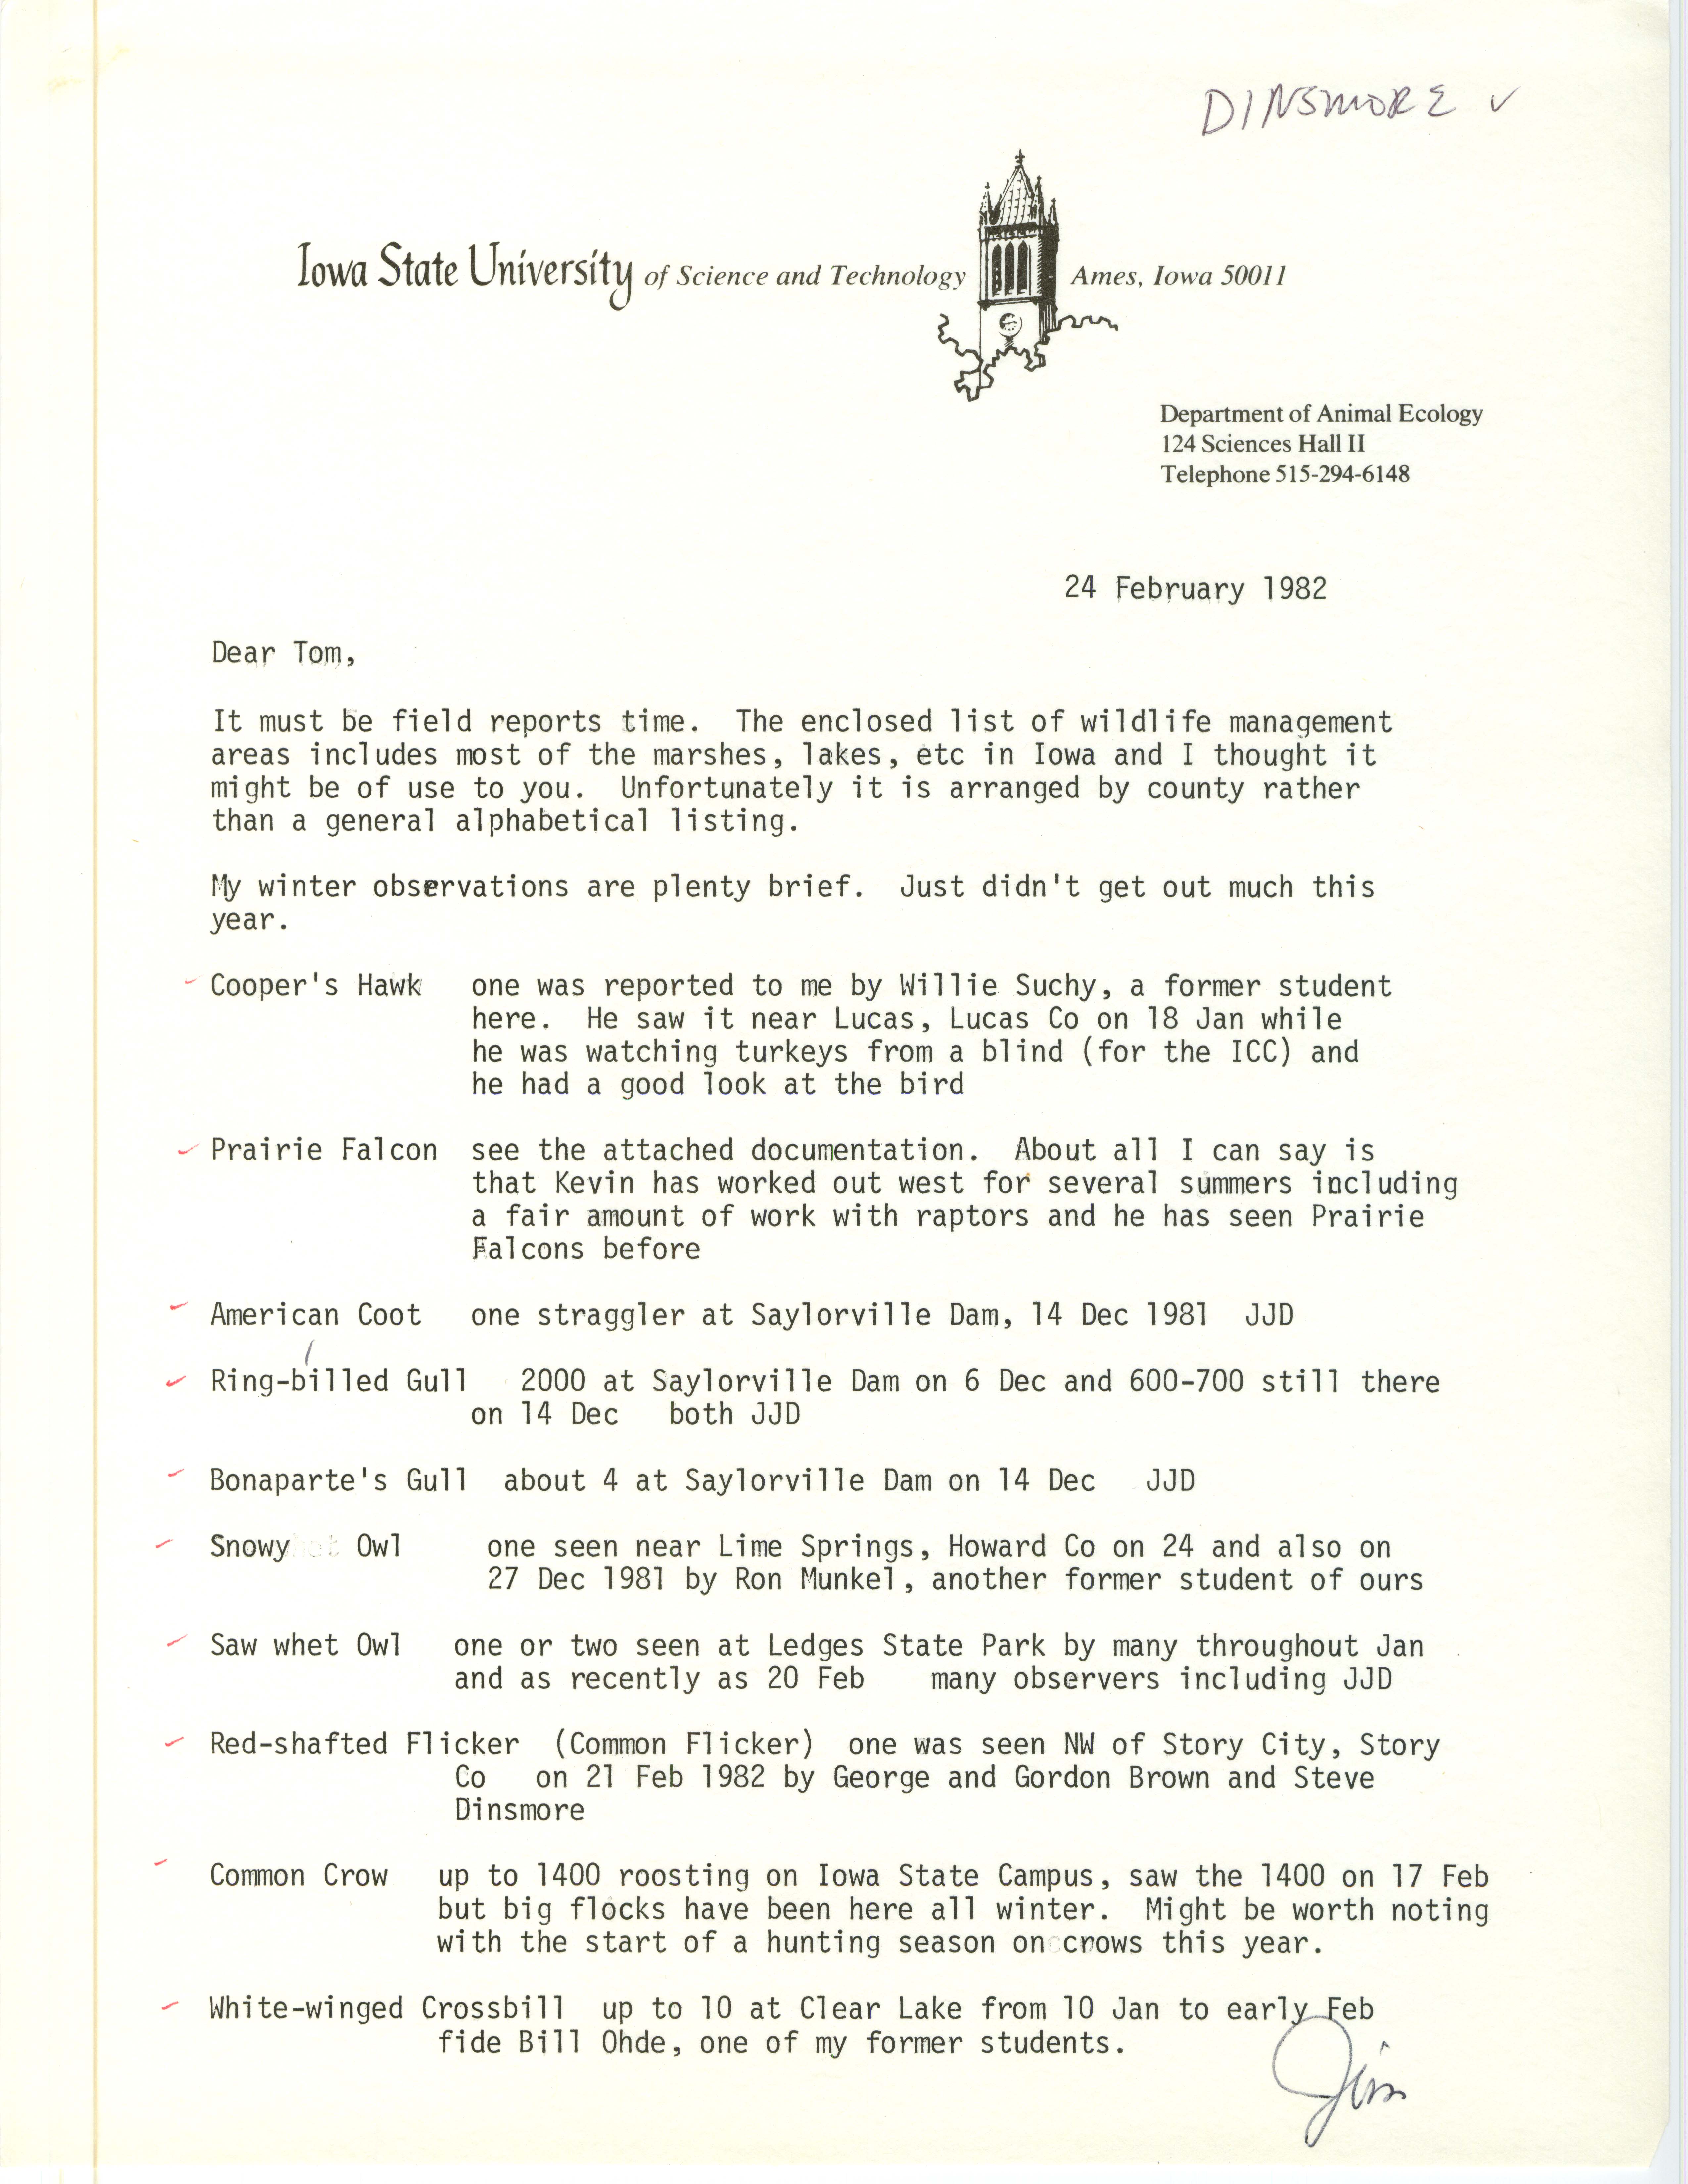 James J. Dinsmore letter to Thomas H. Kent regarding field notes, February 24, 1982